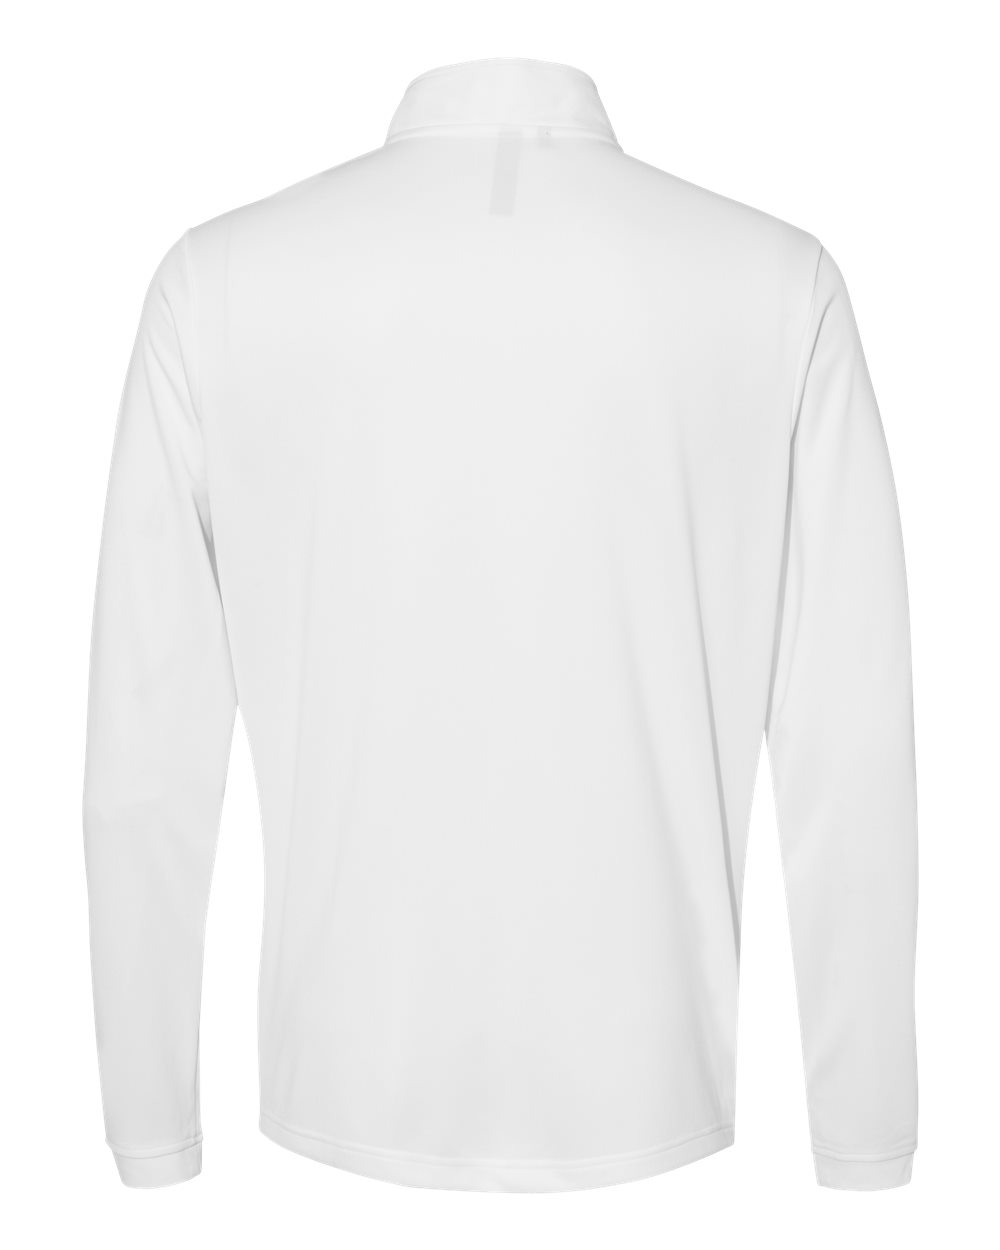 Adidas Mens Lightweight Quarter-Zip Pullover Shirt polyester A401 up to ...